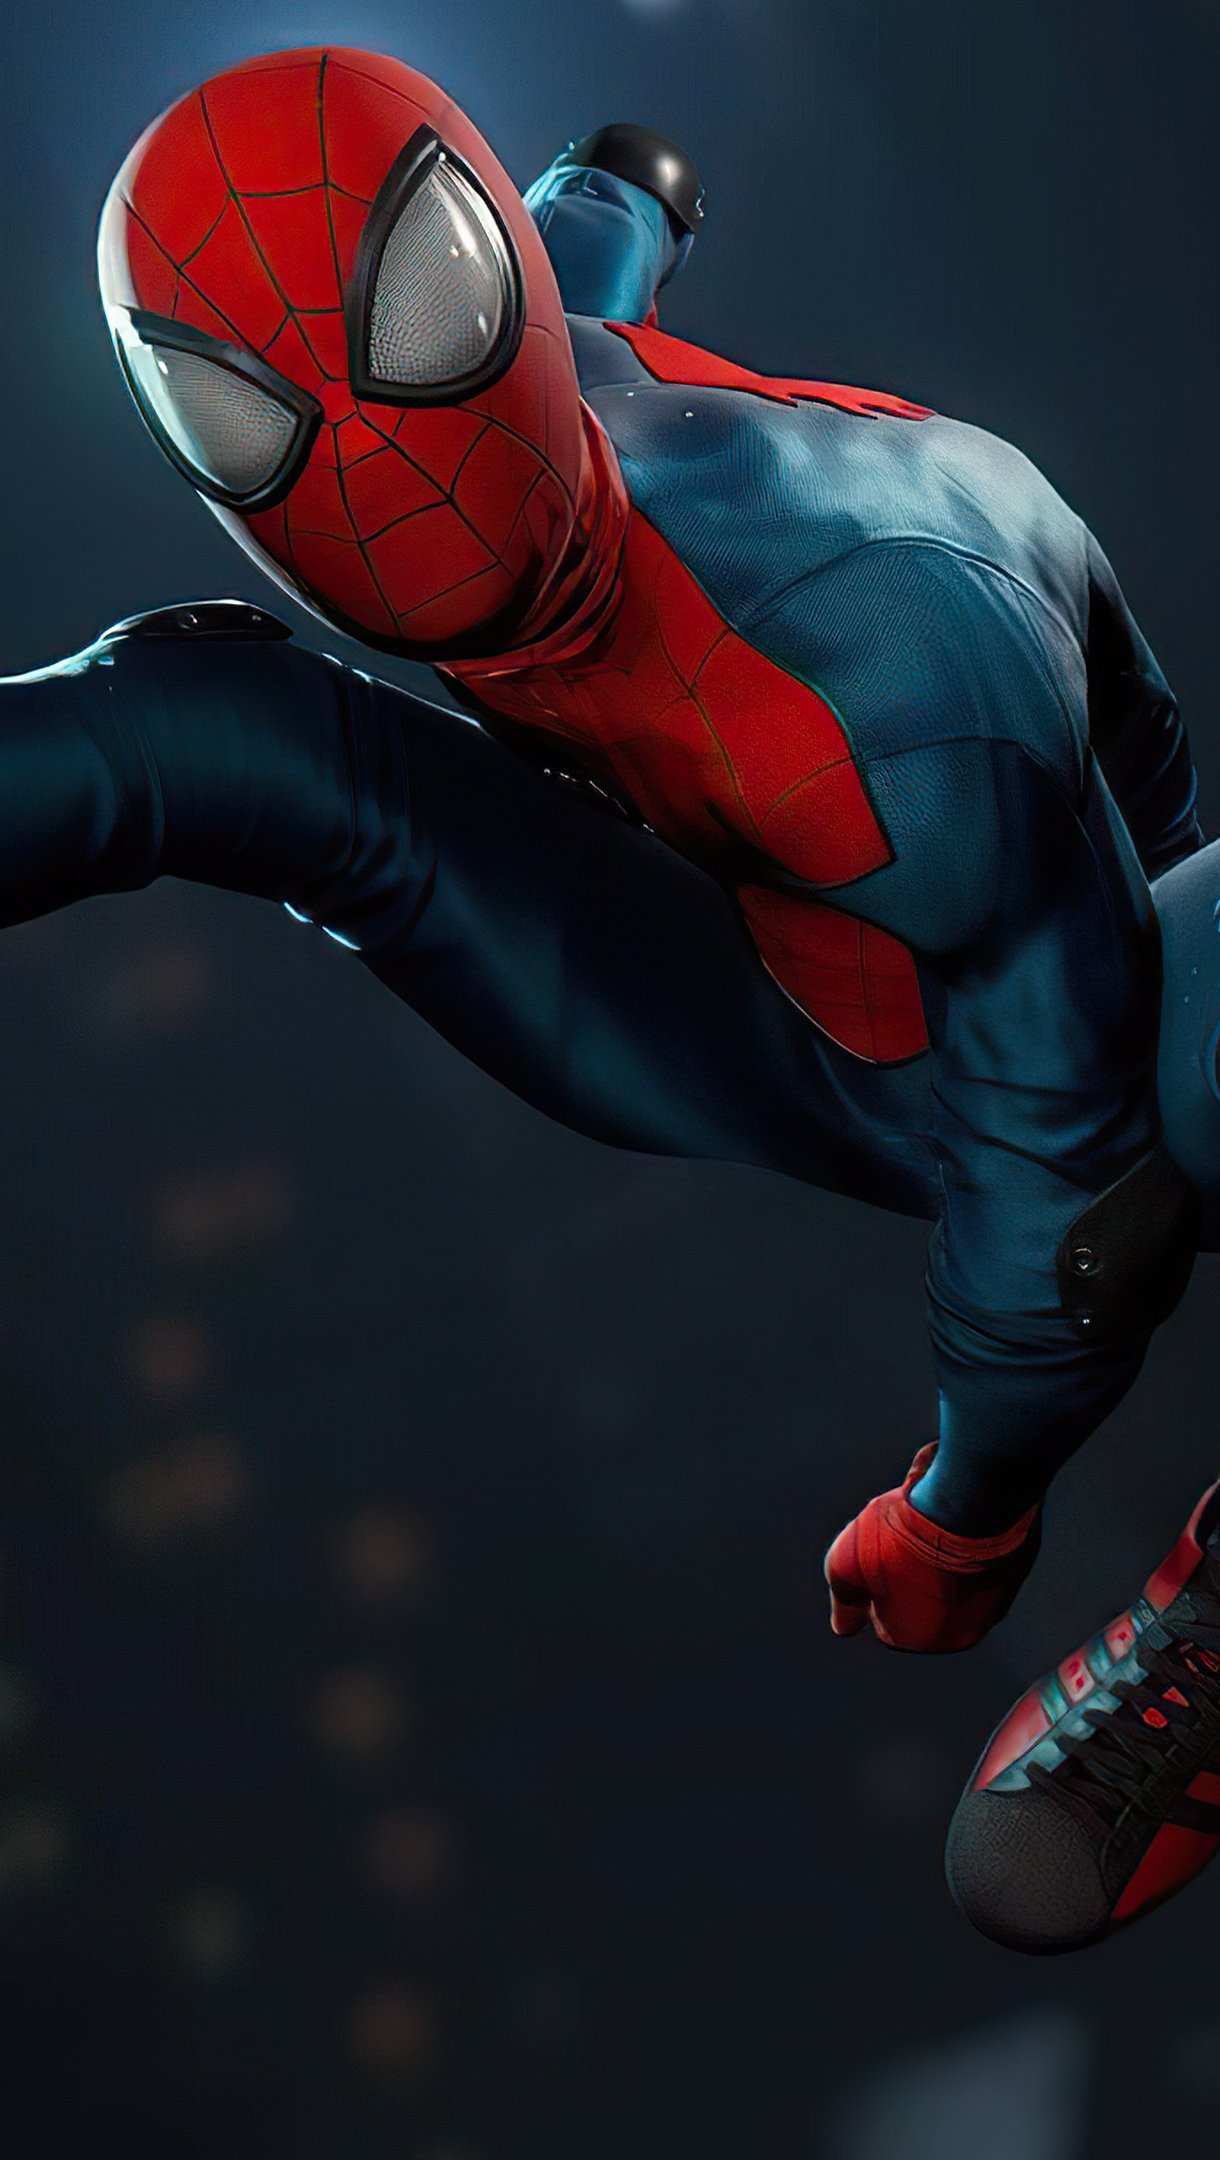 Spider Man Remastered Wallpaper 4k Ultra HD ID:8765